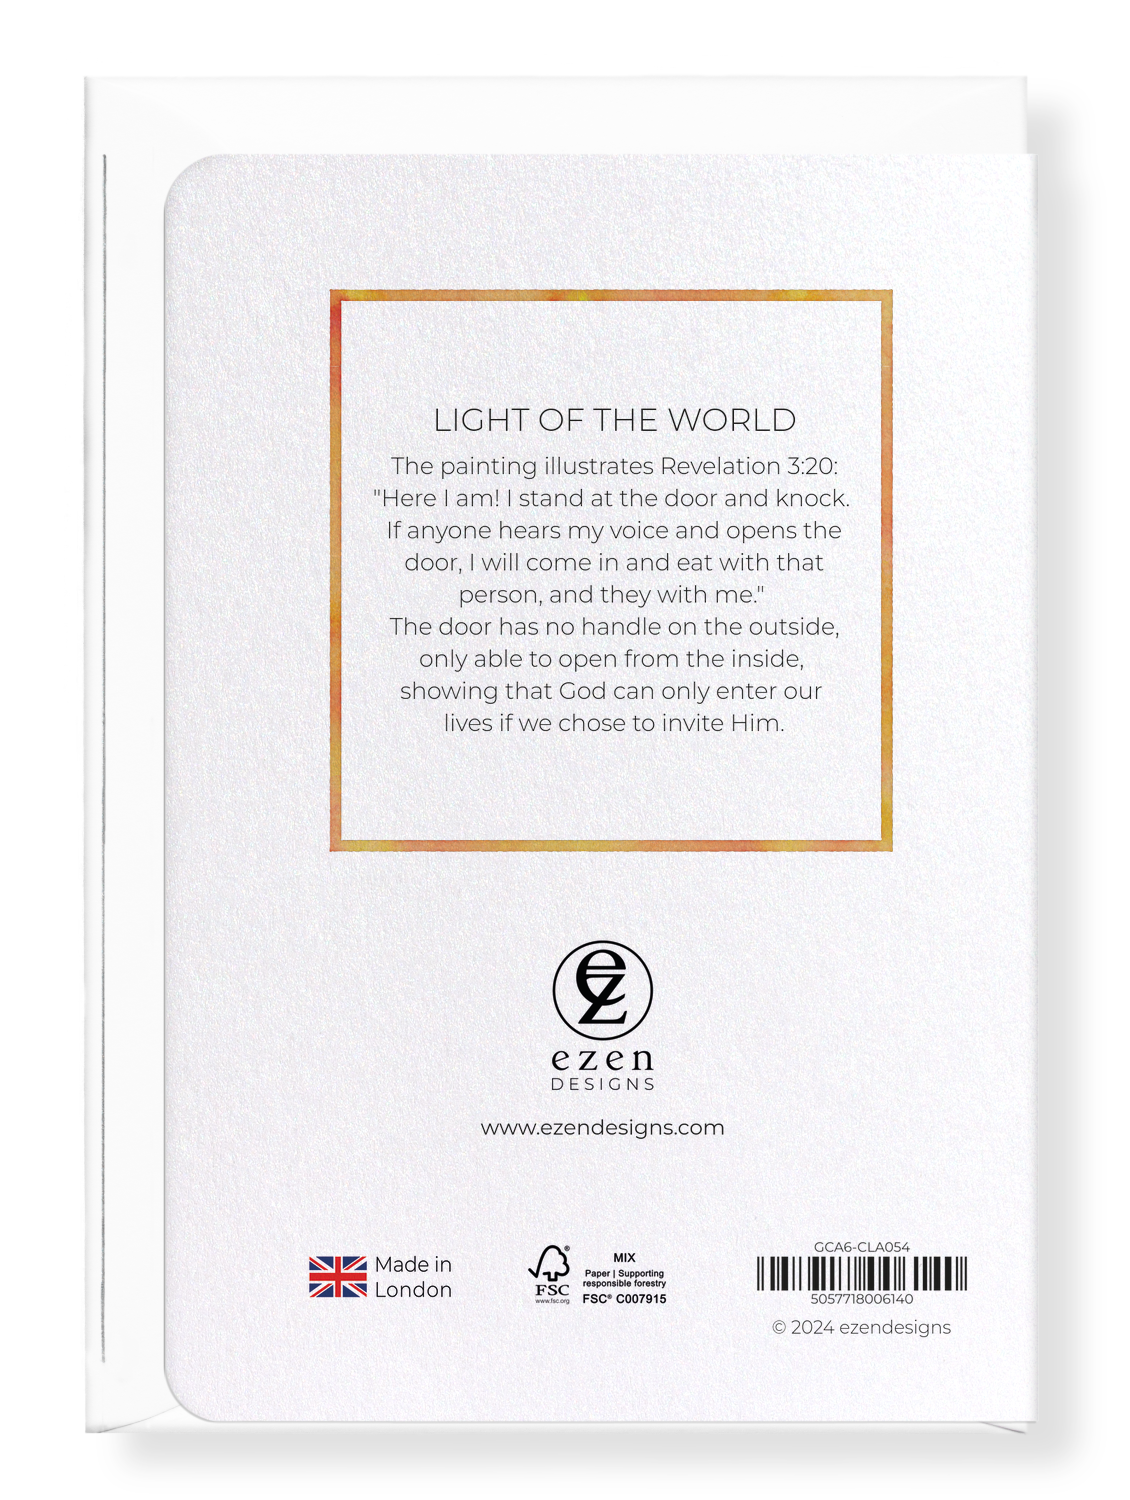 Ezen Designs - Light of the world - Greeting Card - Back